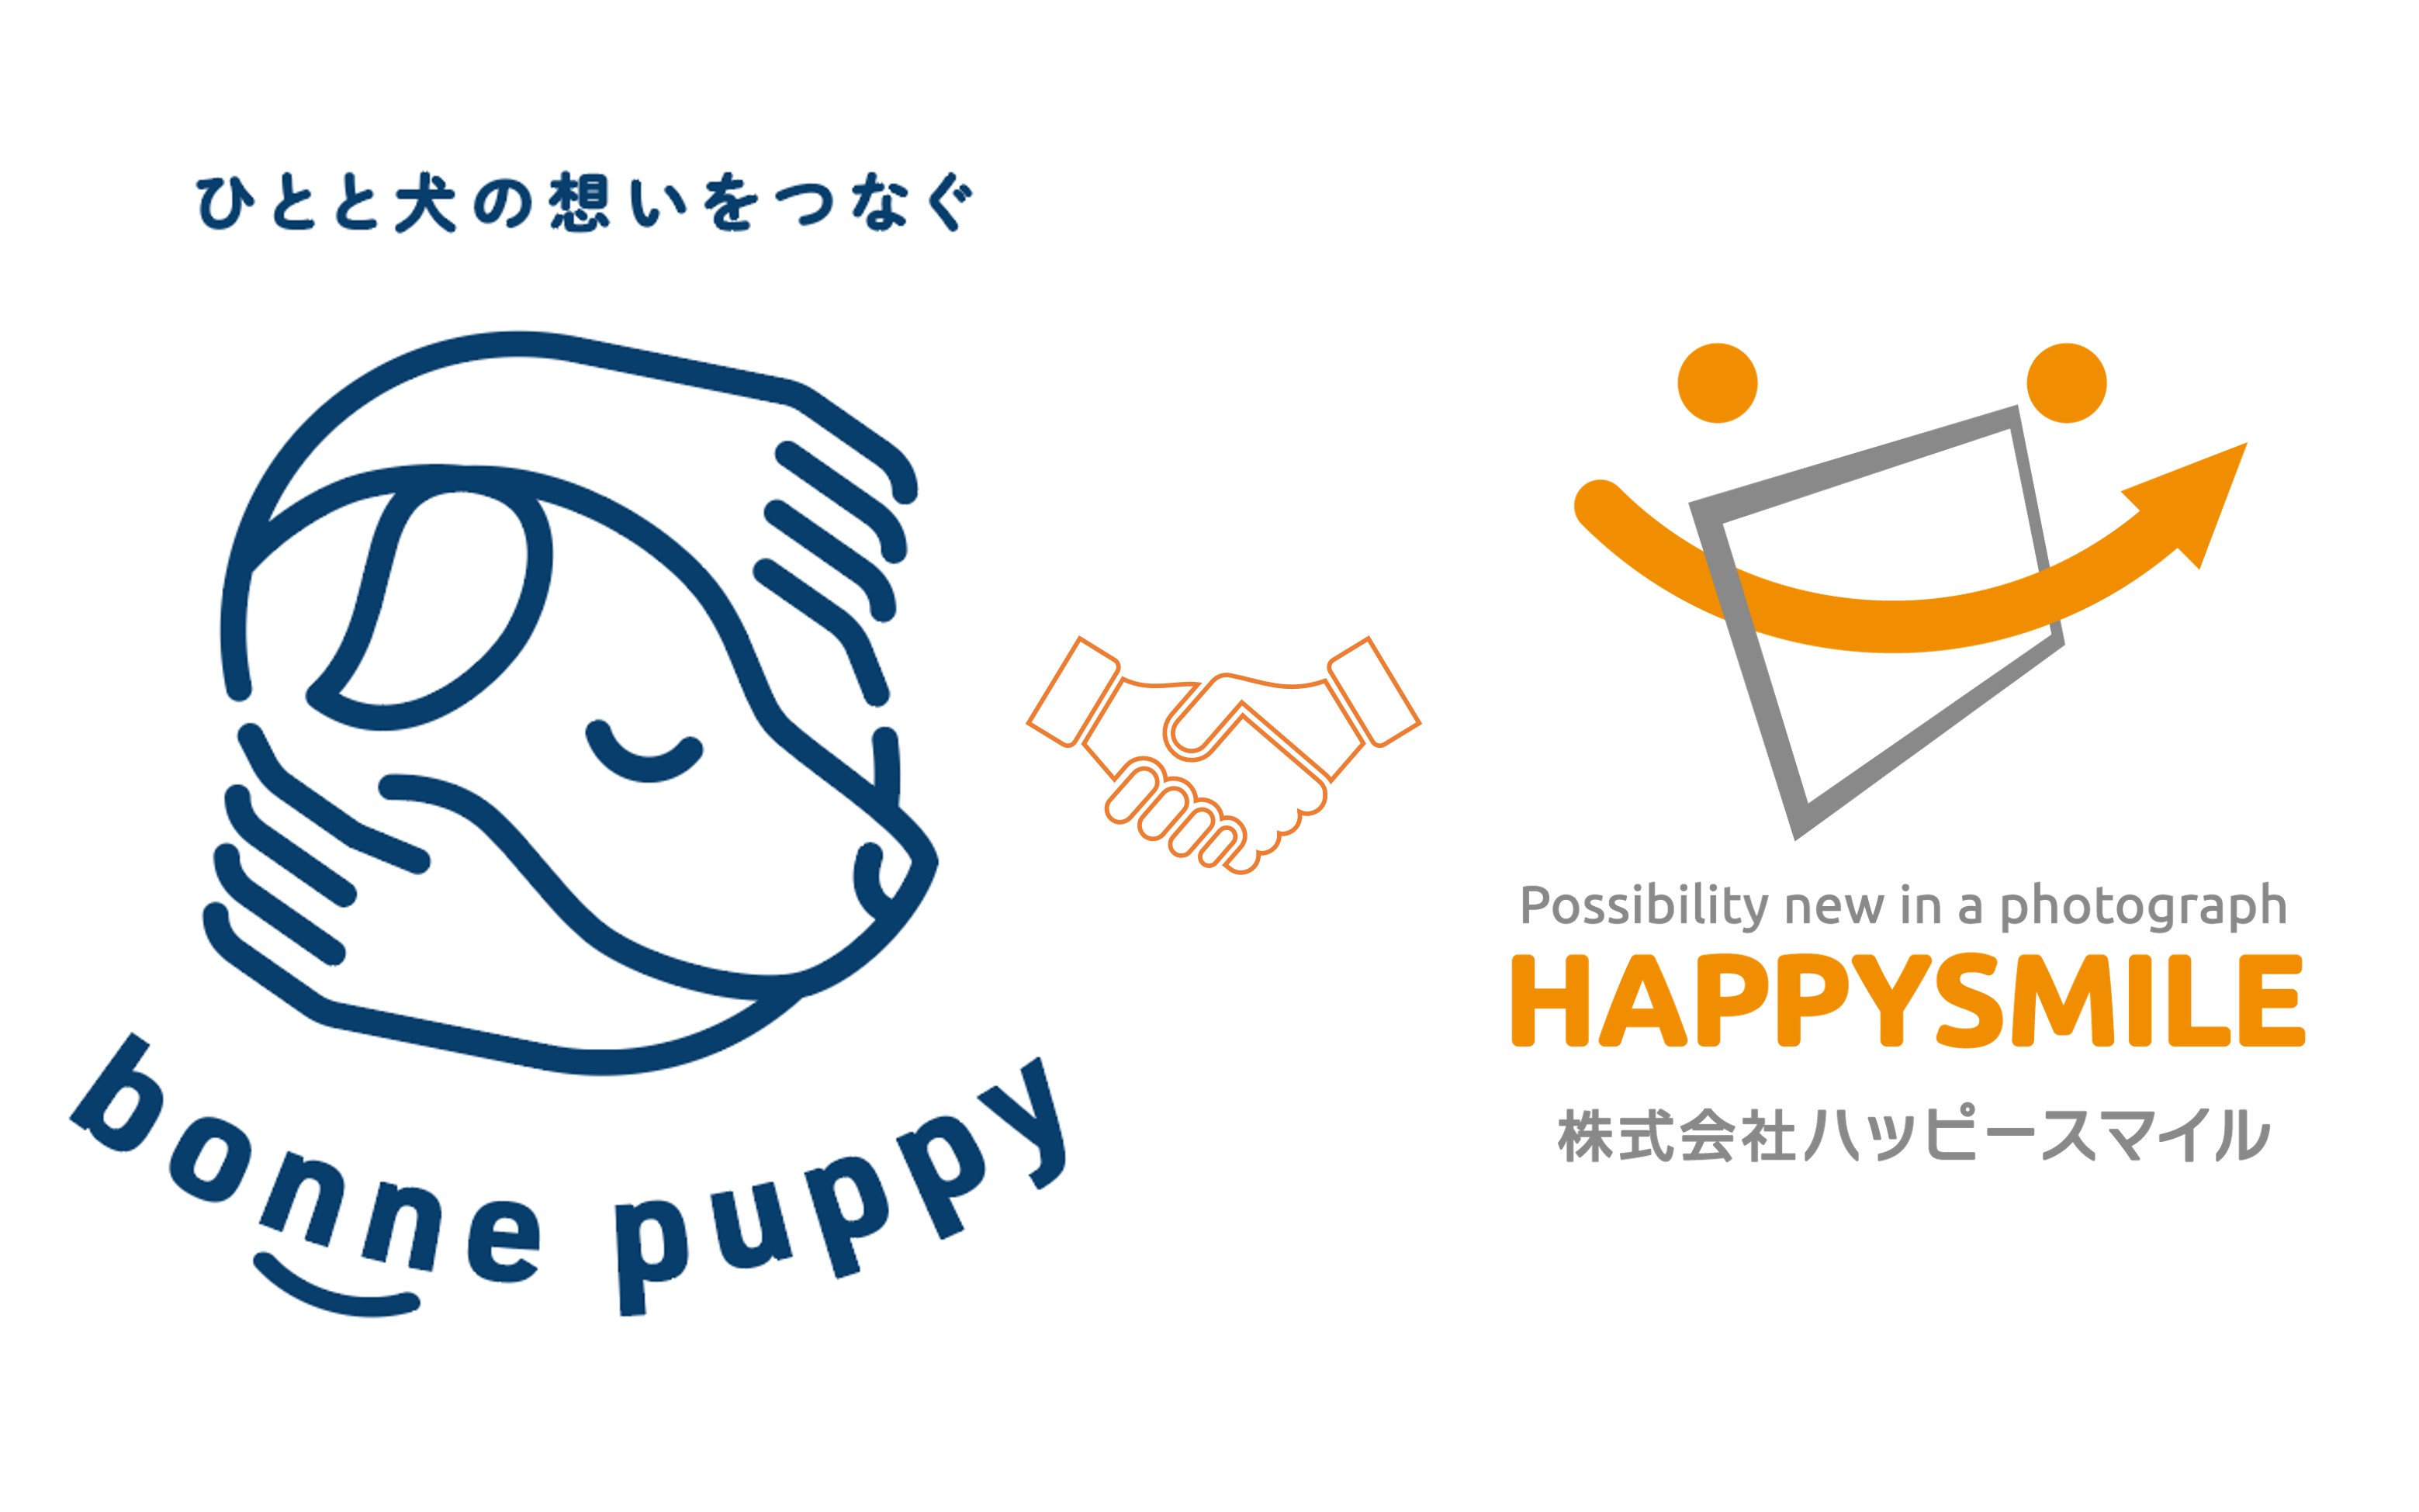 『bonne puppy』 × 株式会社ハッピースマイル『みんなのおもいで.com』導入契約を締結